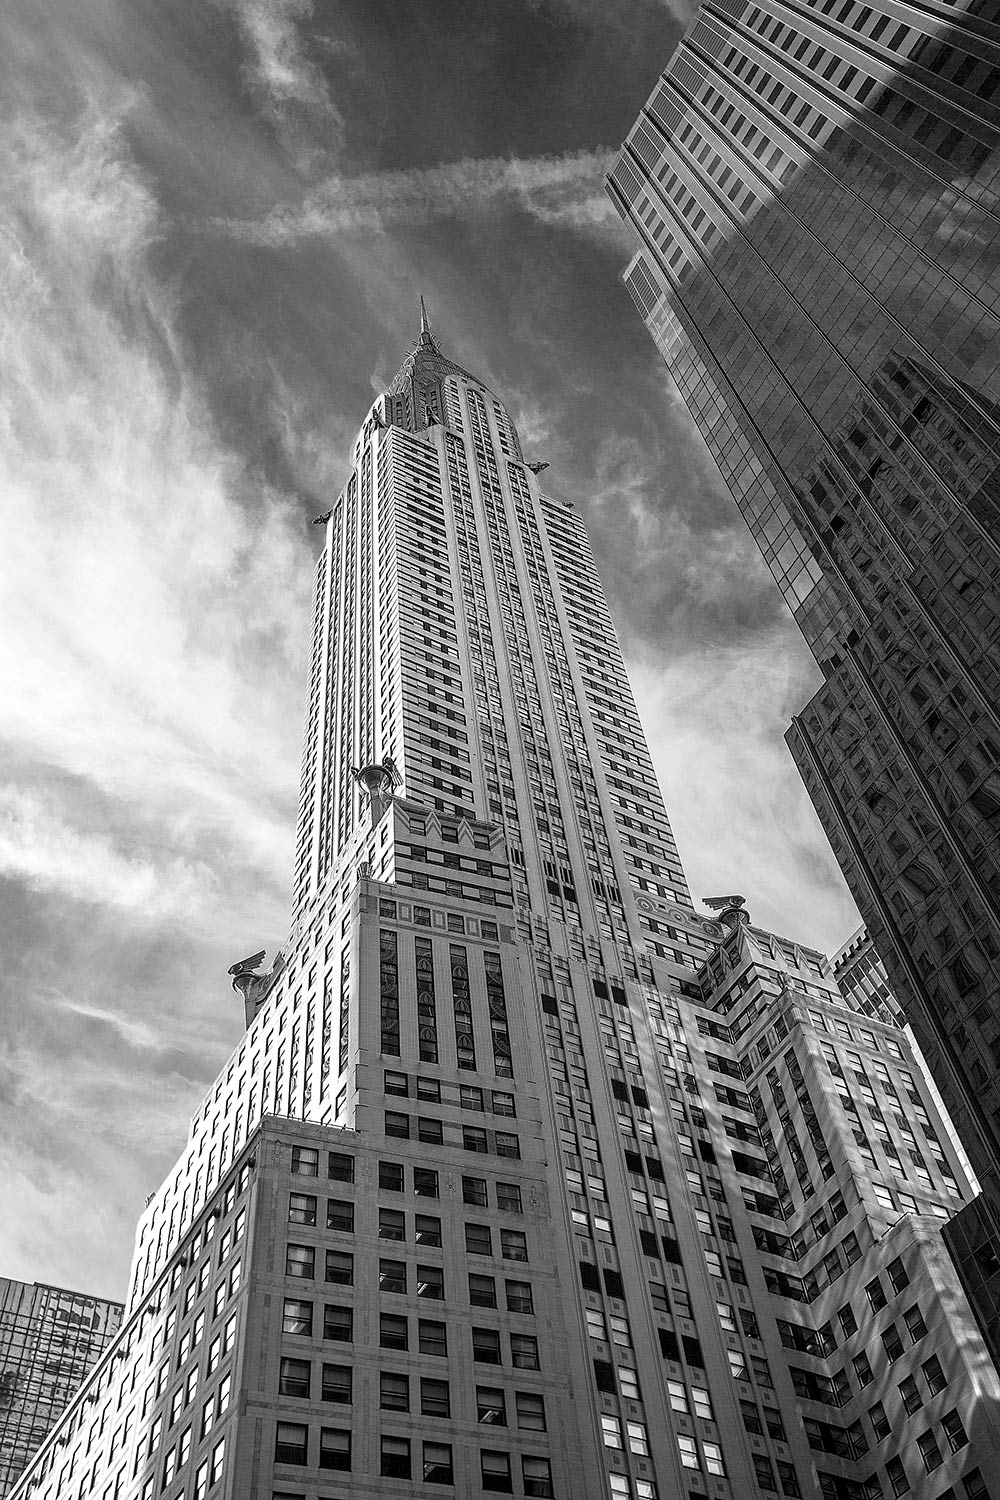 The Chrysler Building